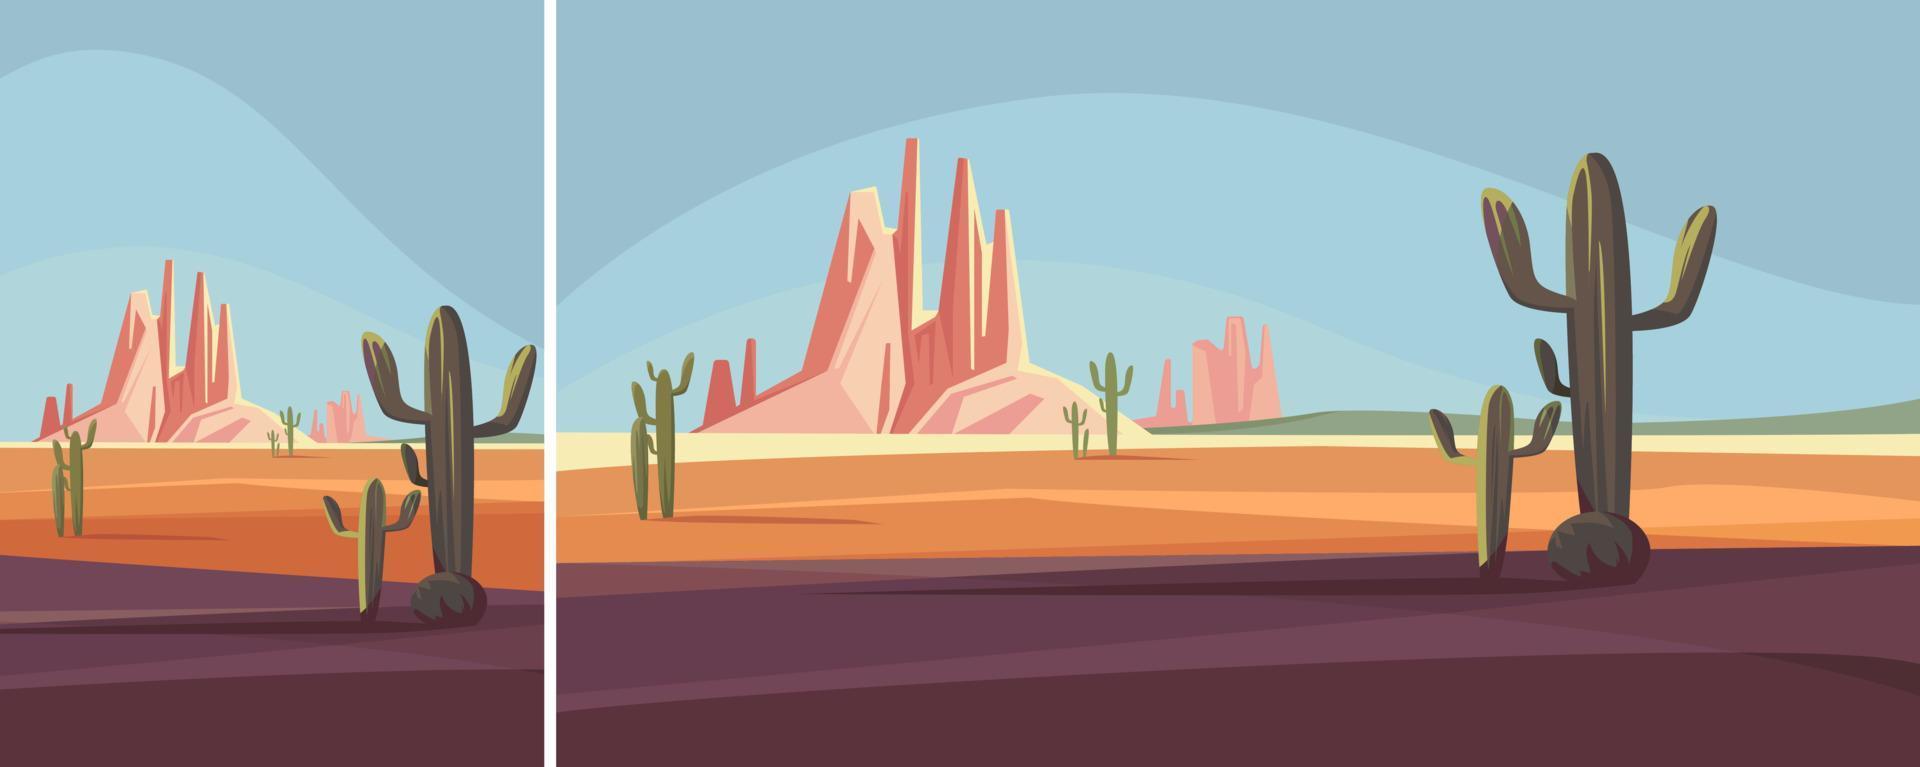 paisaje del desierto de arizona. paisajes naturales en diferentes formatos. vector